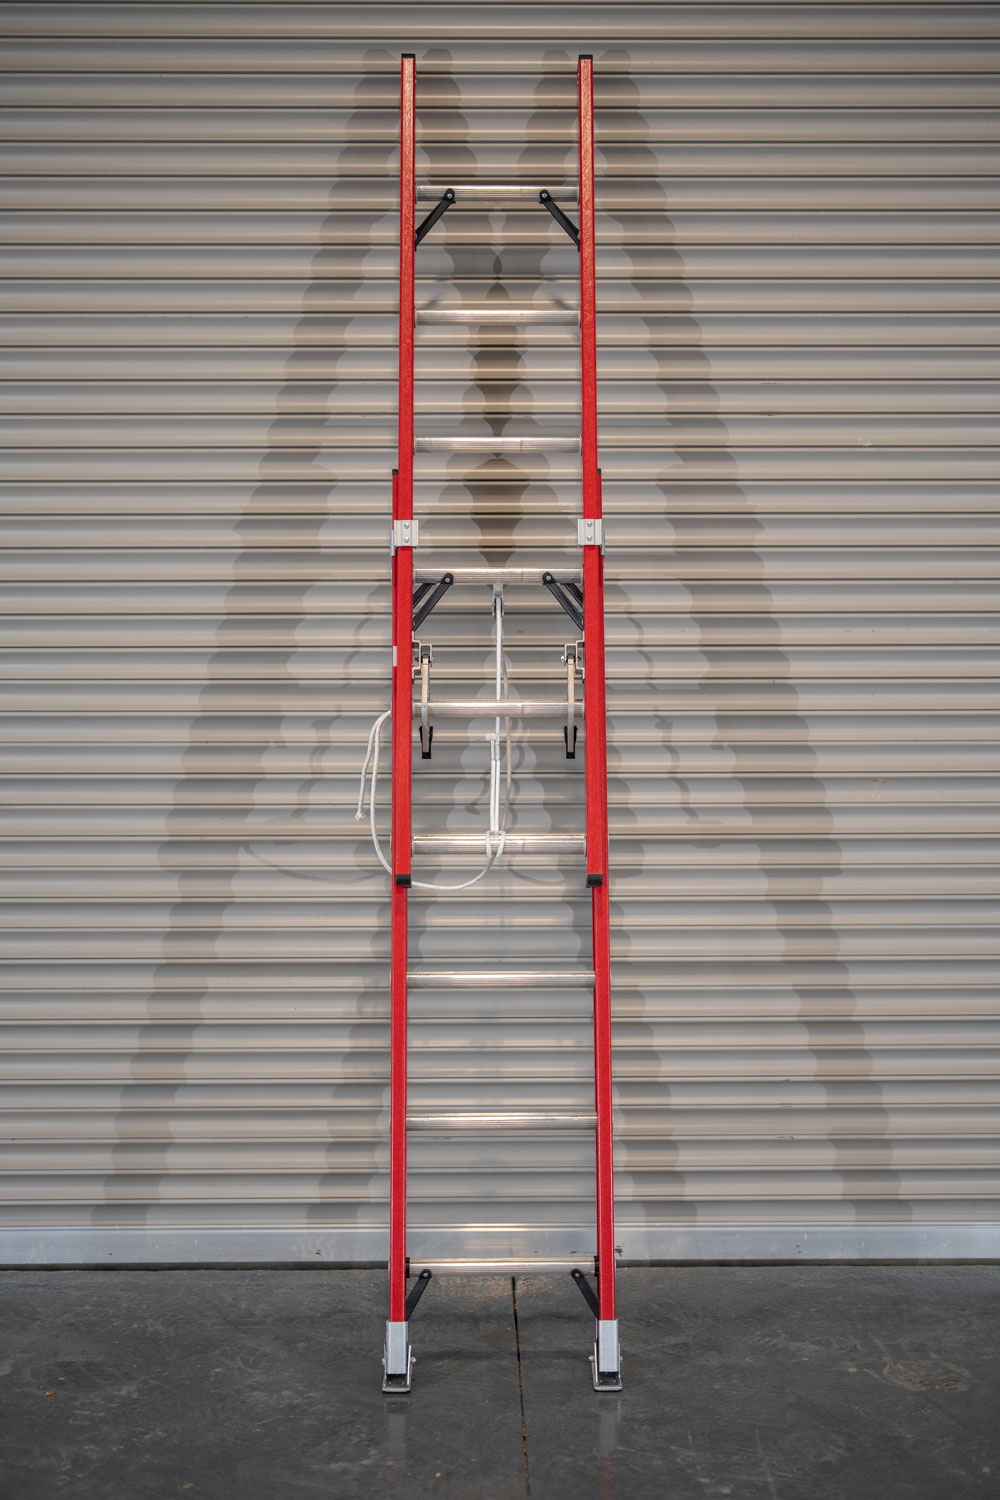 Fiberglass Telescoping Ladders For Sale